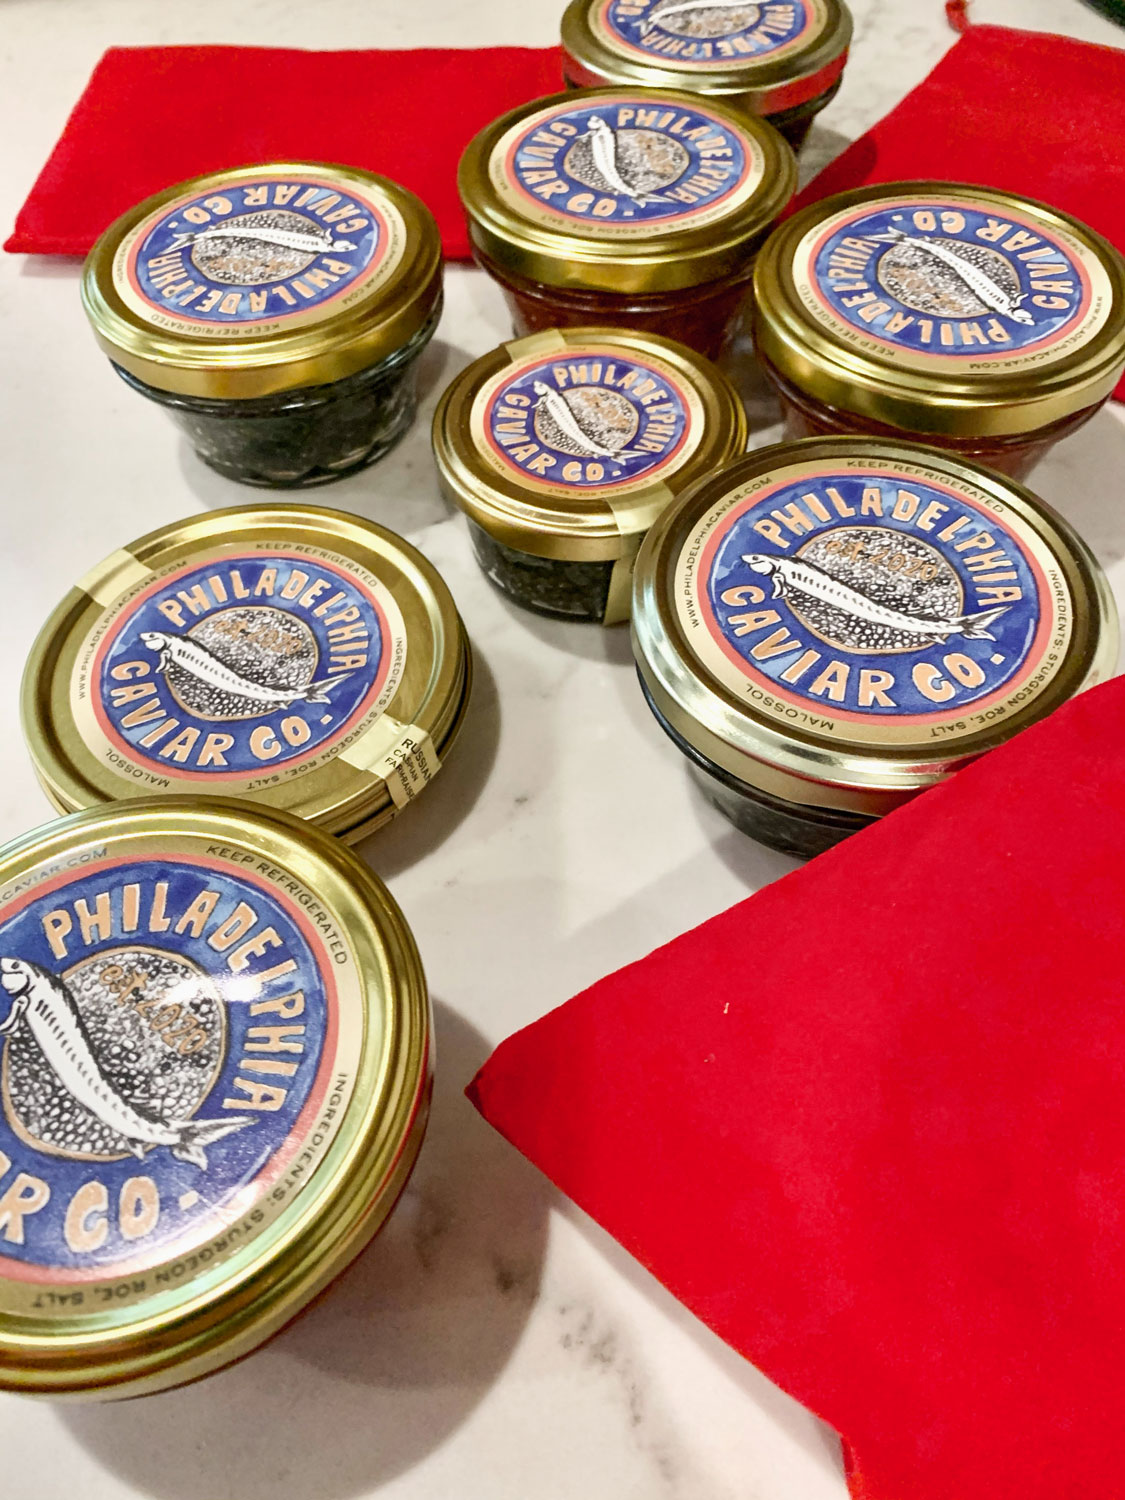 Small jars of caviar.